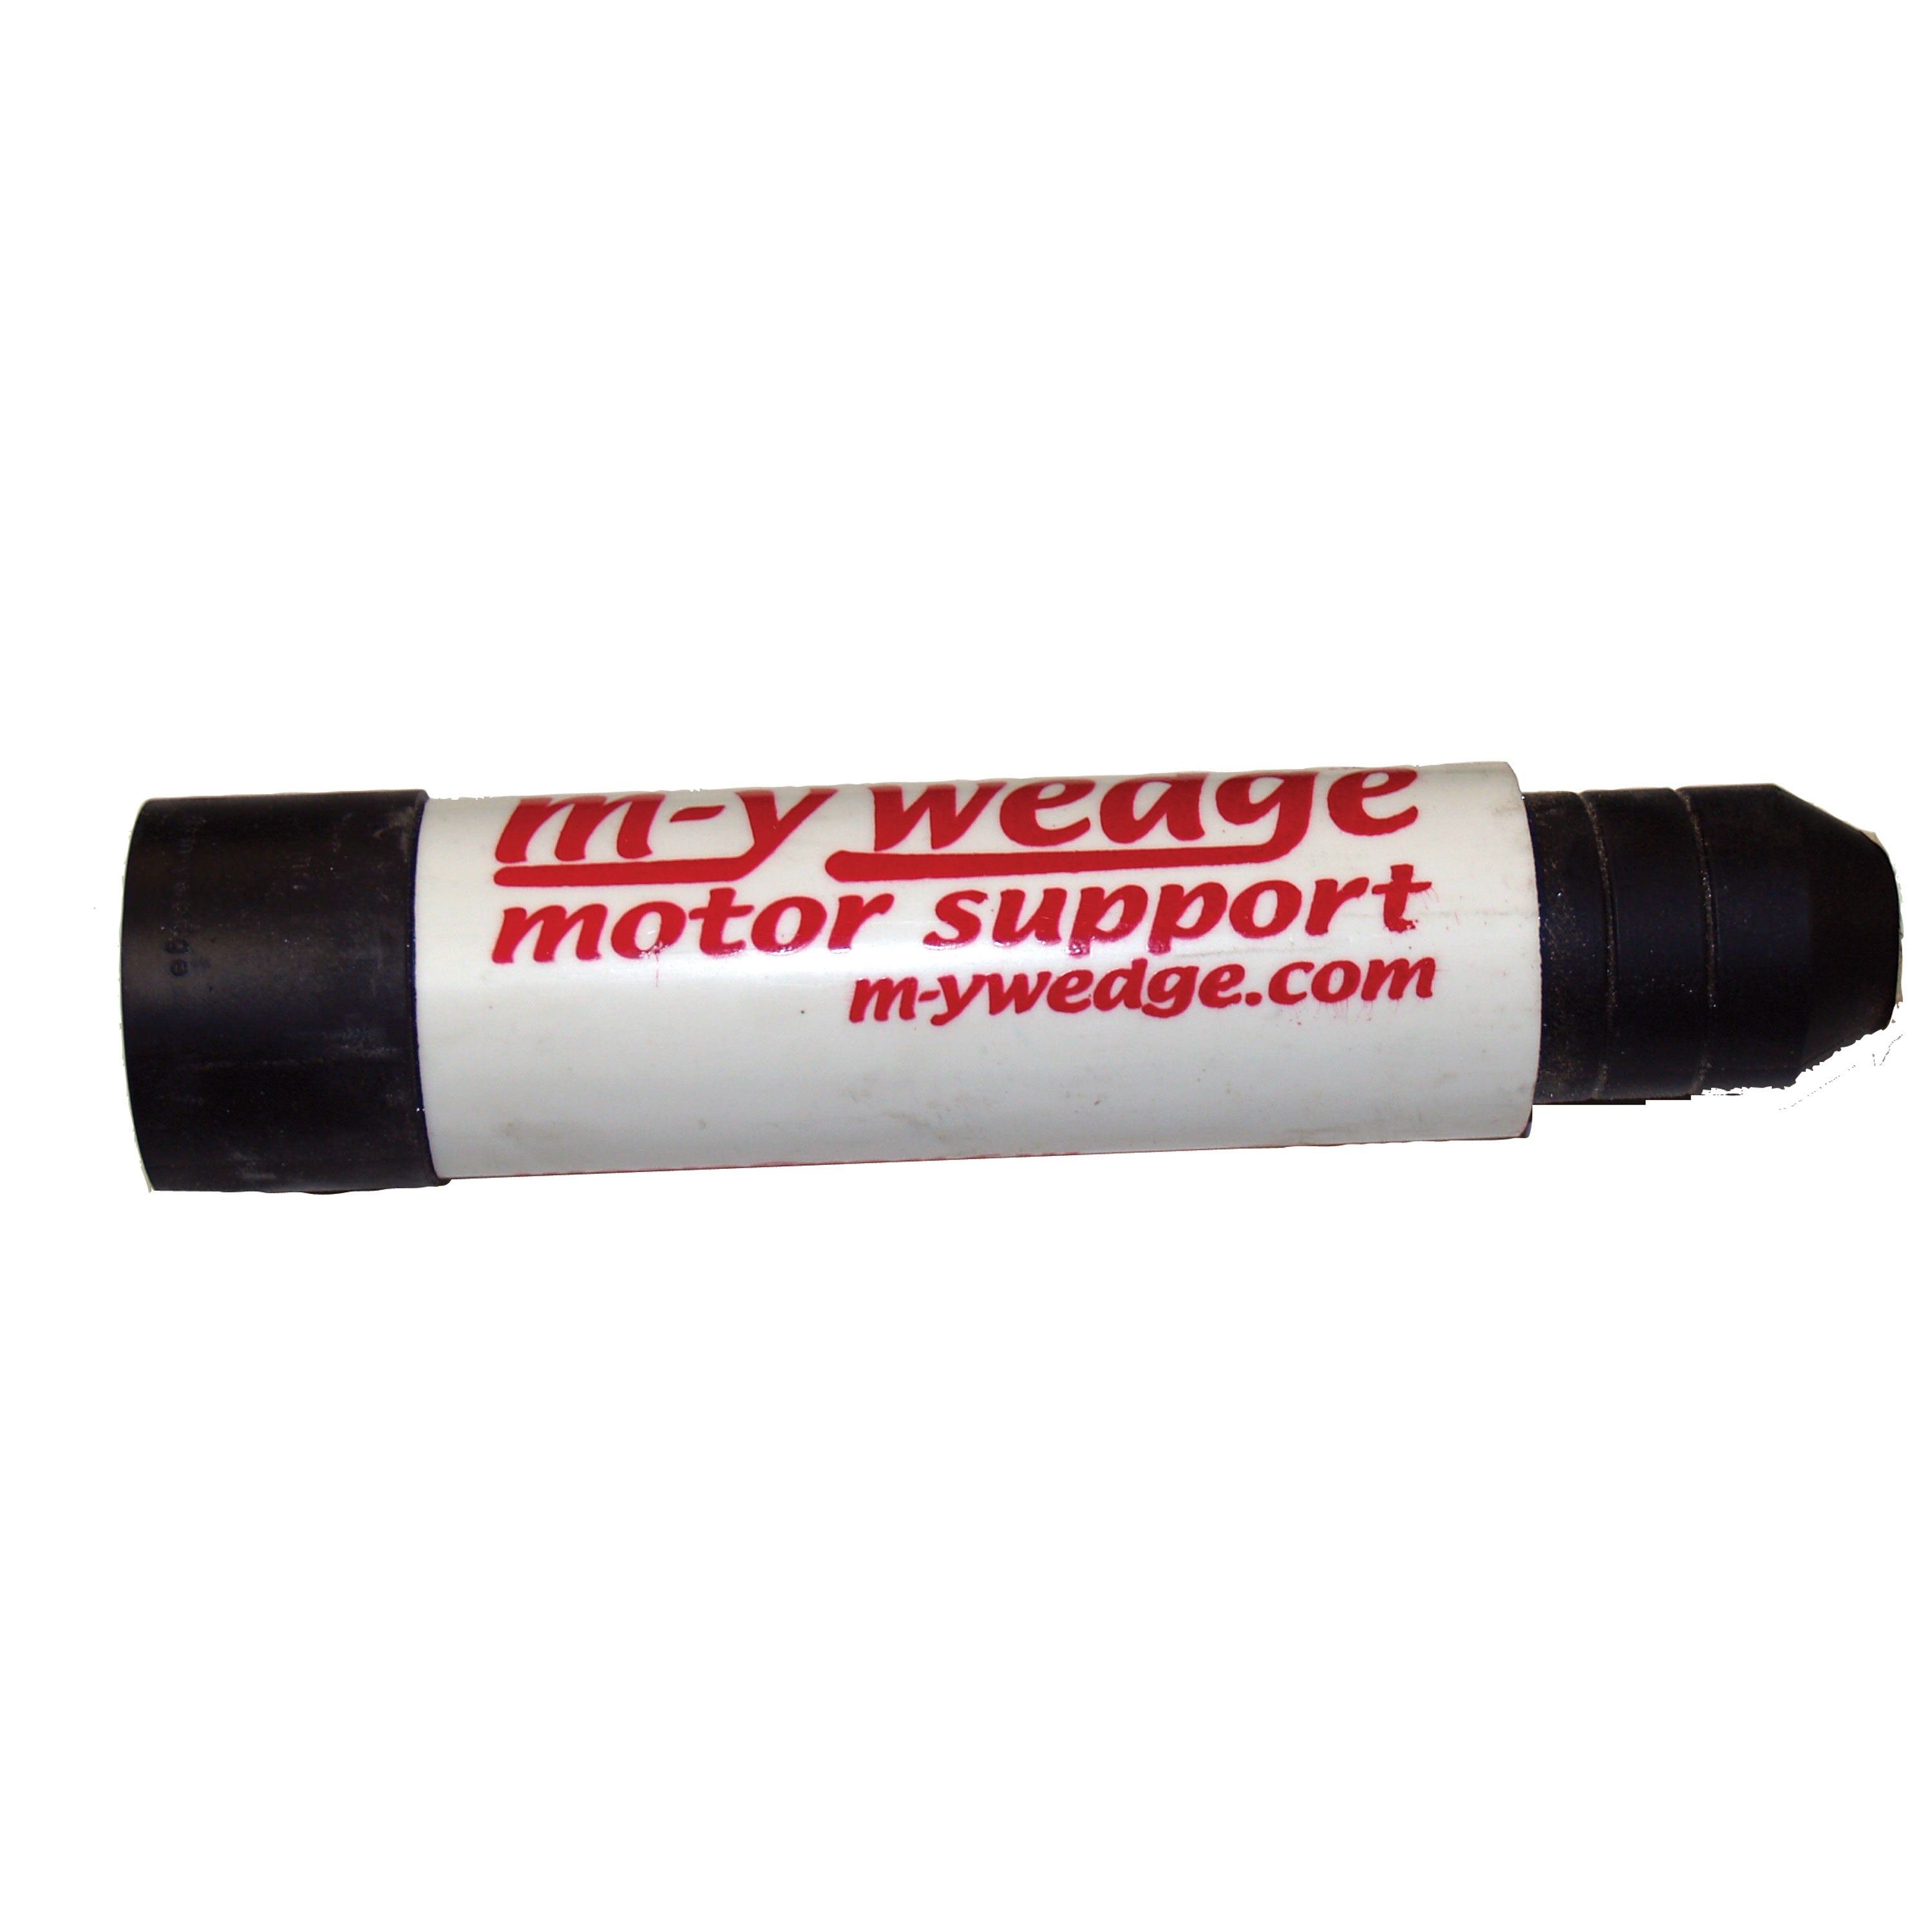 M-Y Wedge Motor Support M-Y ALL